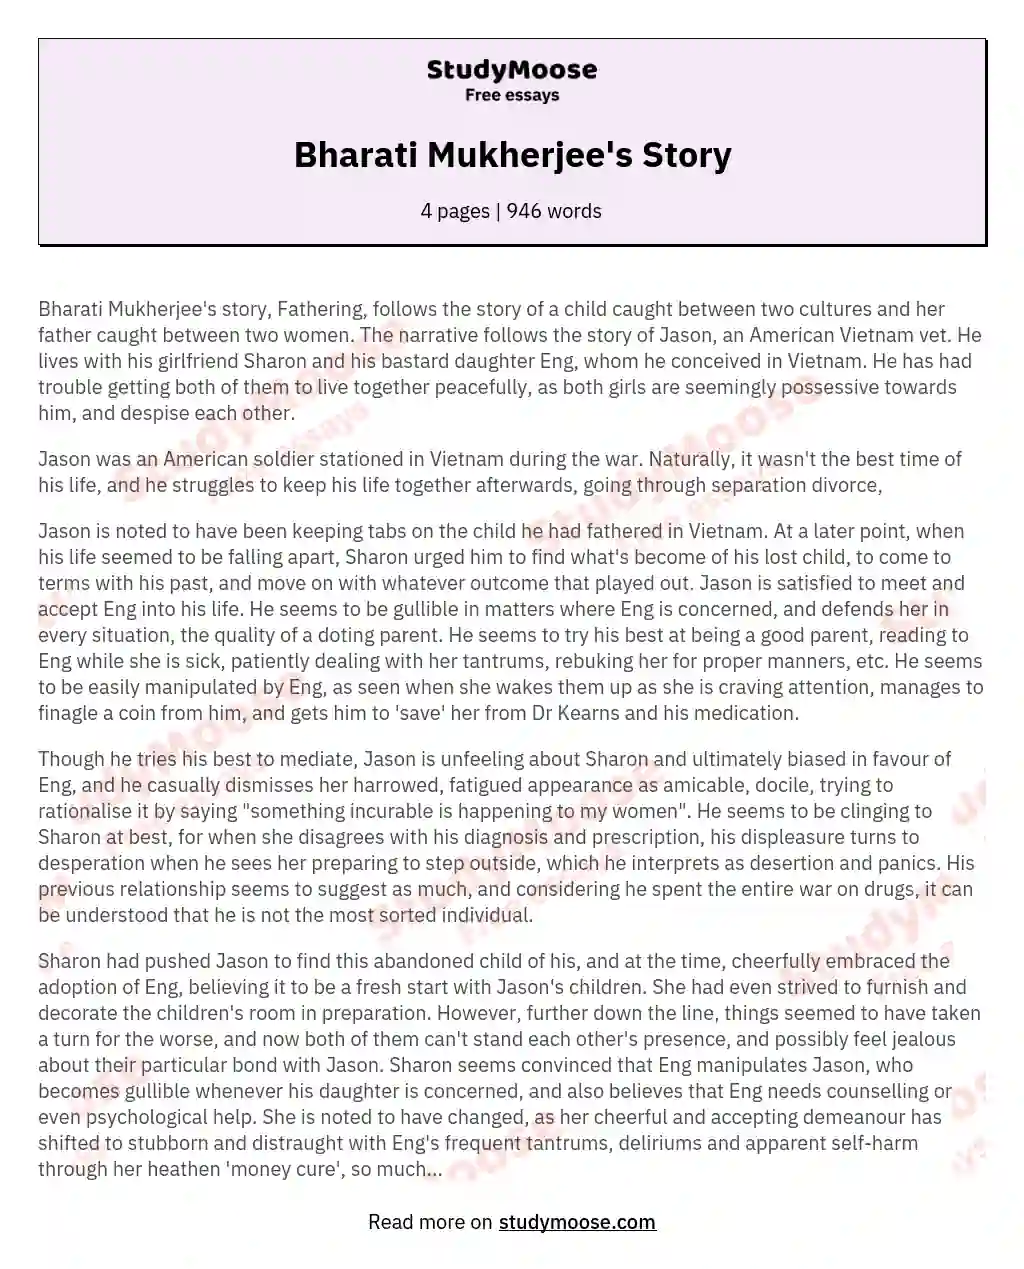 Bharati Mukherjee's Story